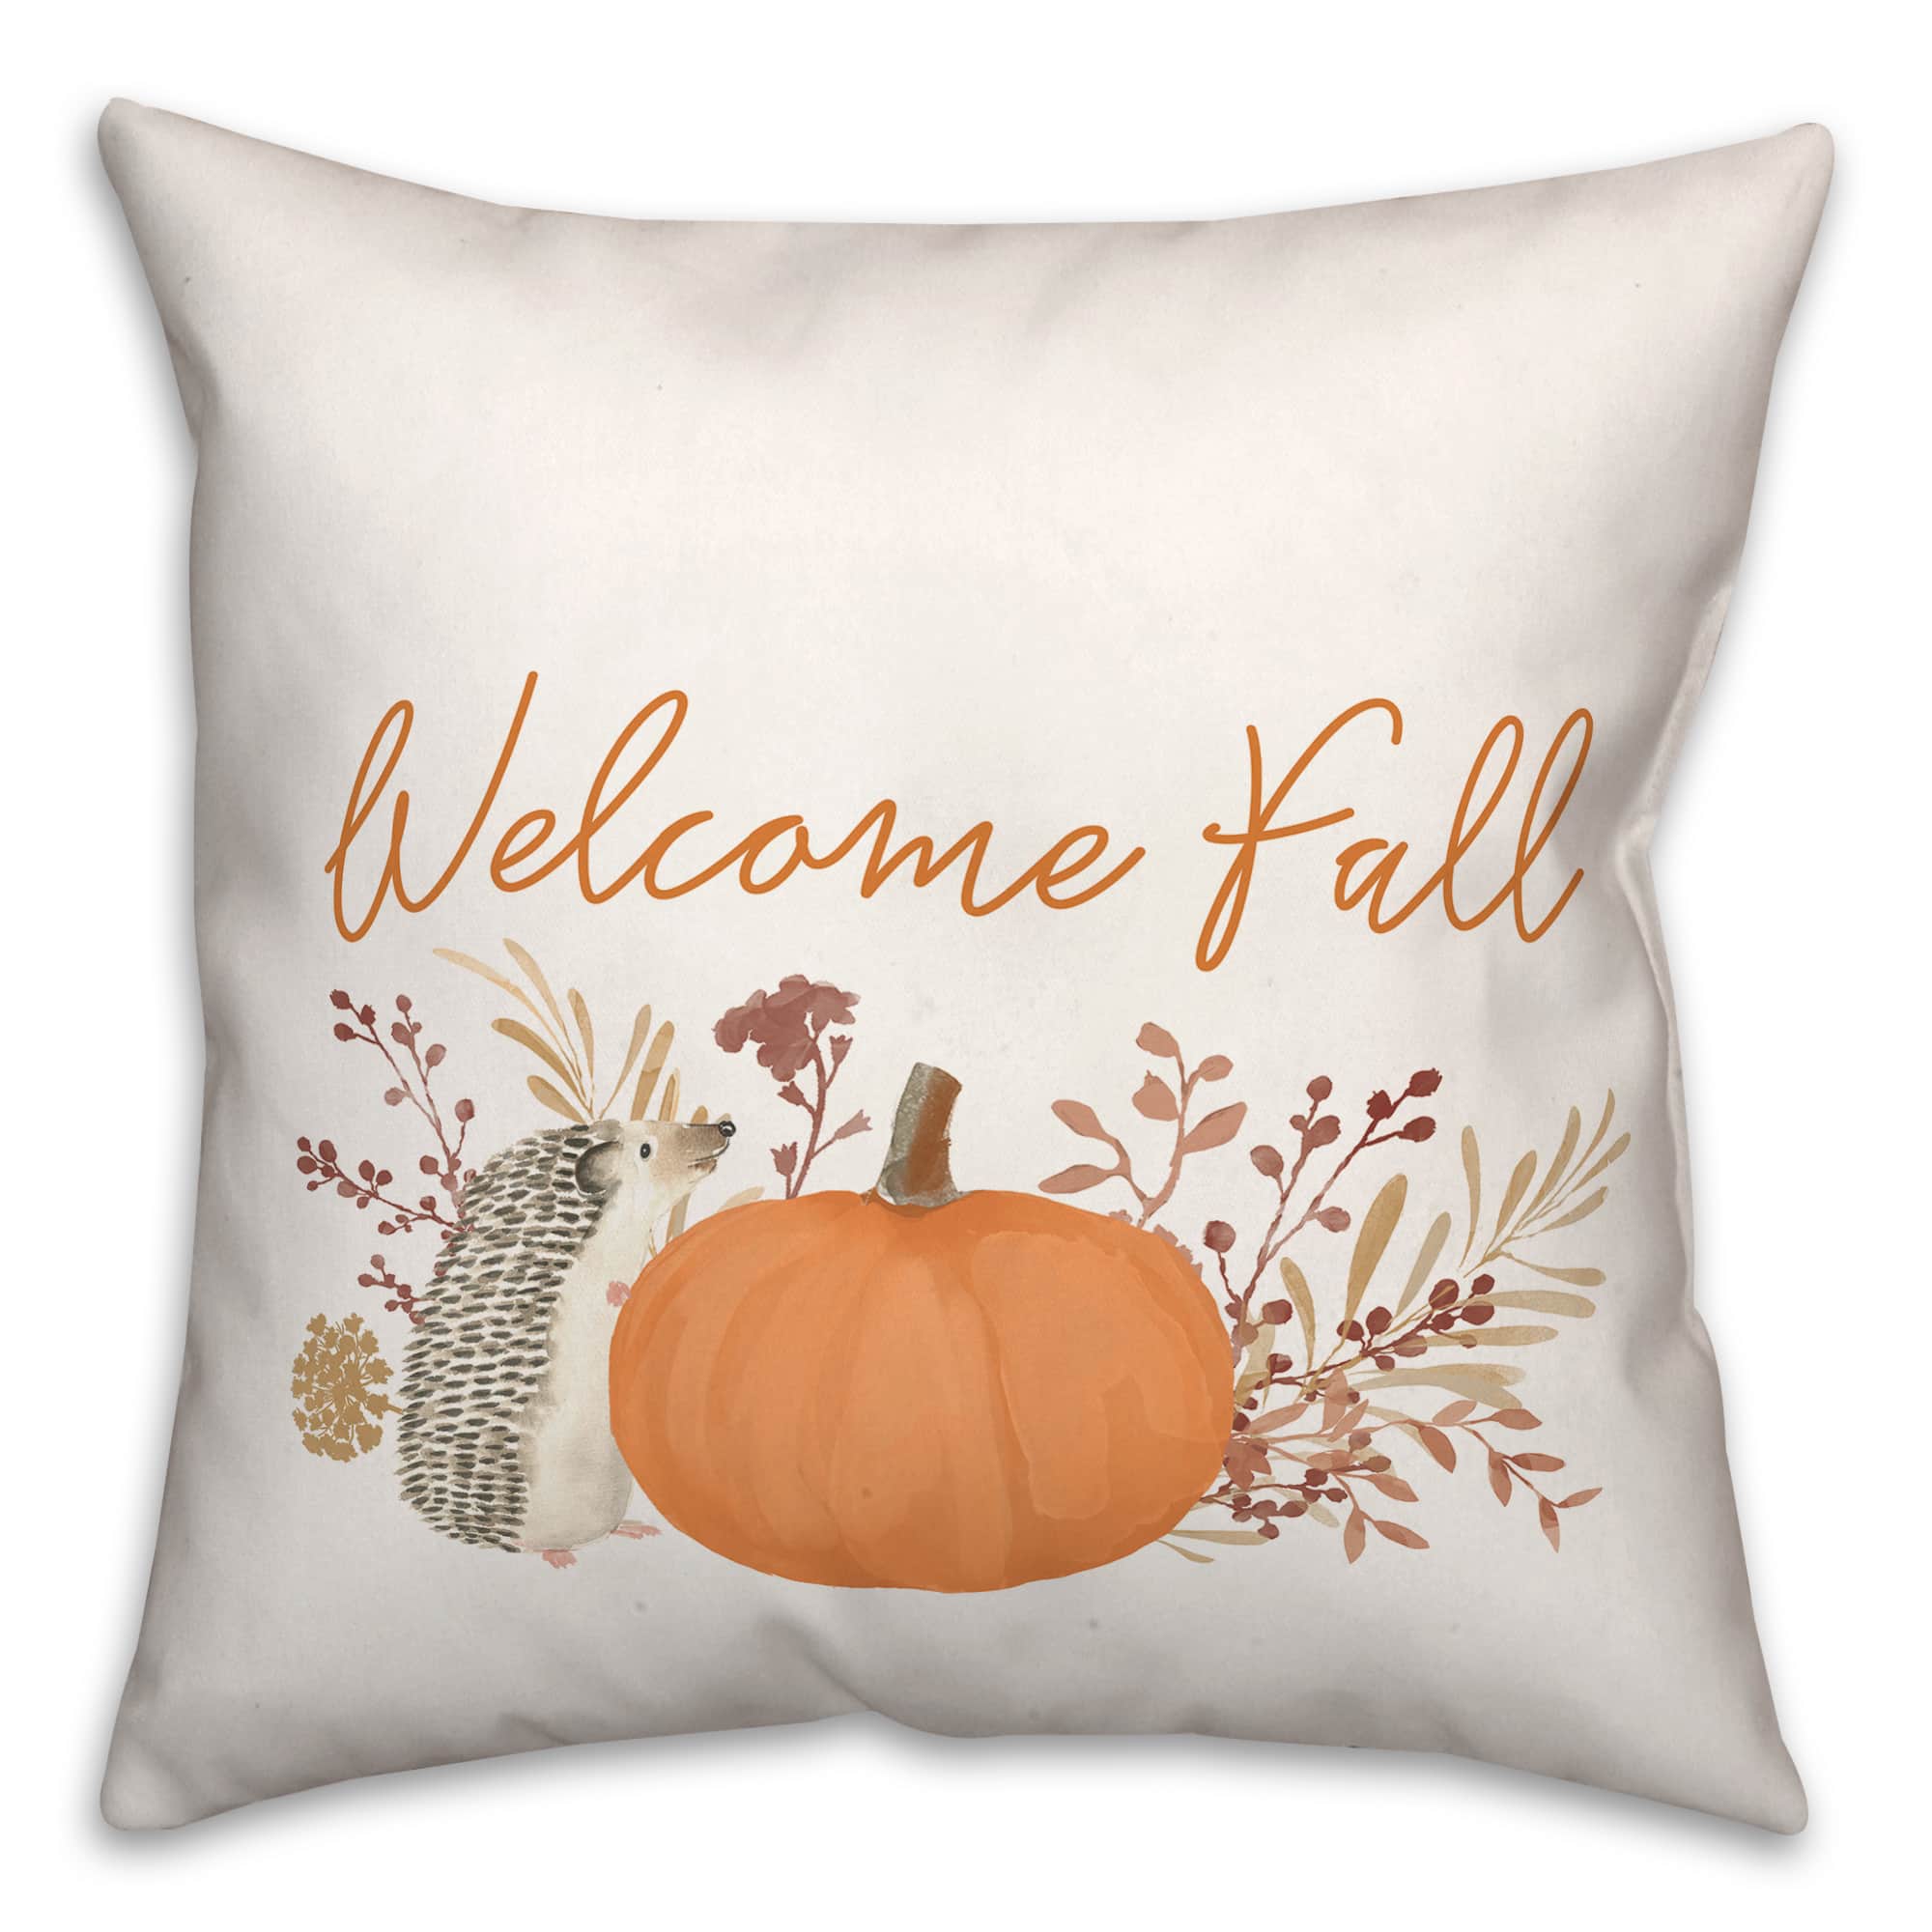 Welcome Fall Hedgehog Throw Pillow